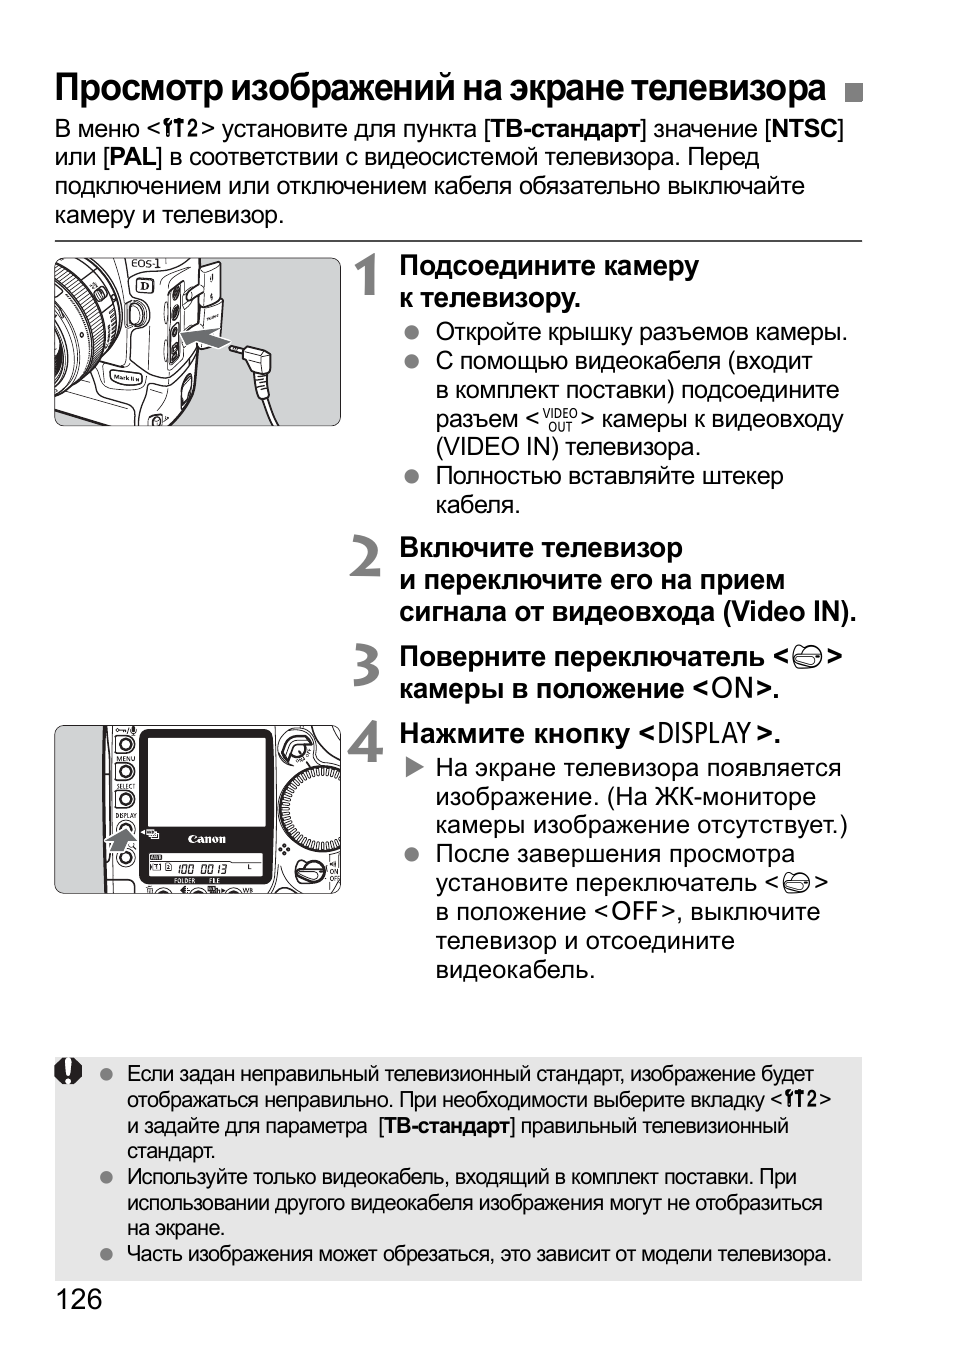 Просмотр изображений на экране телевизора | Инструкция по эксплуатации Canon EOS 1D Mark II N | Страница 126 / 196